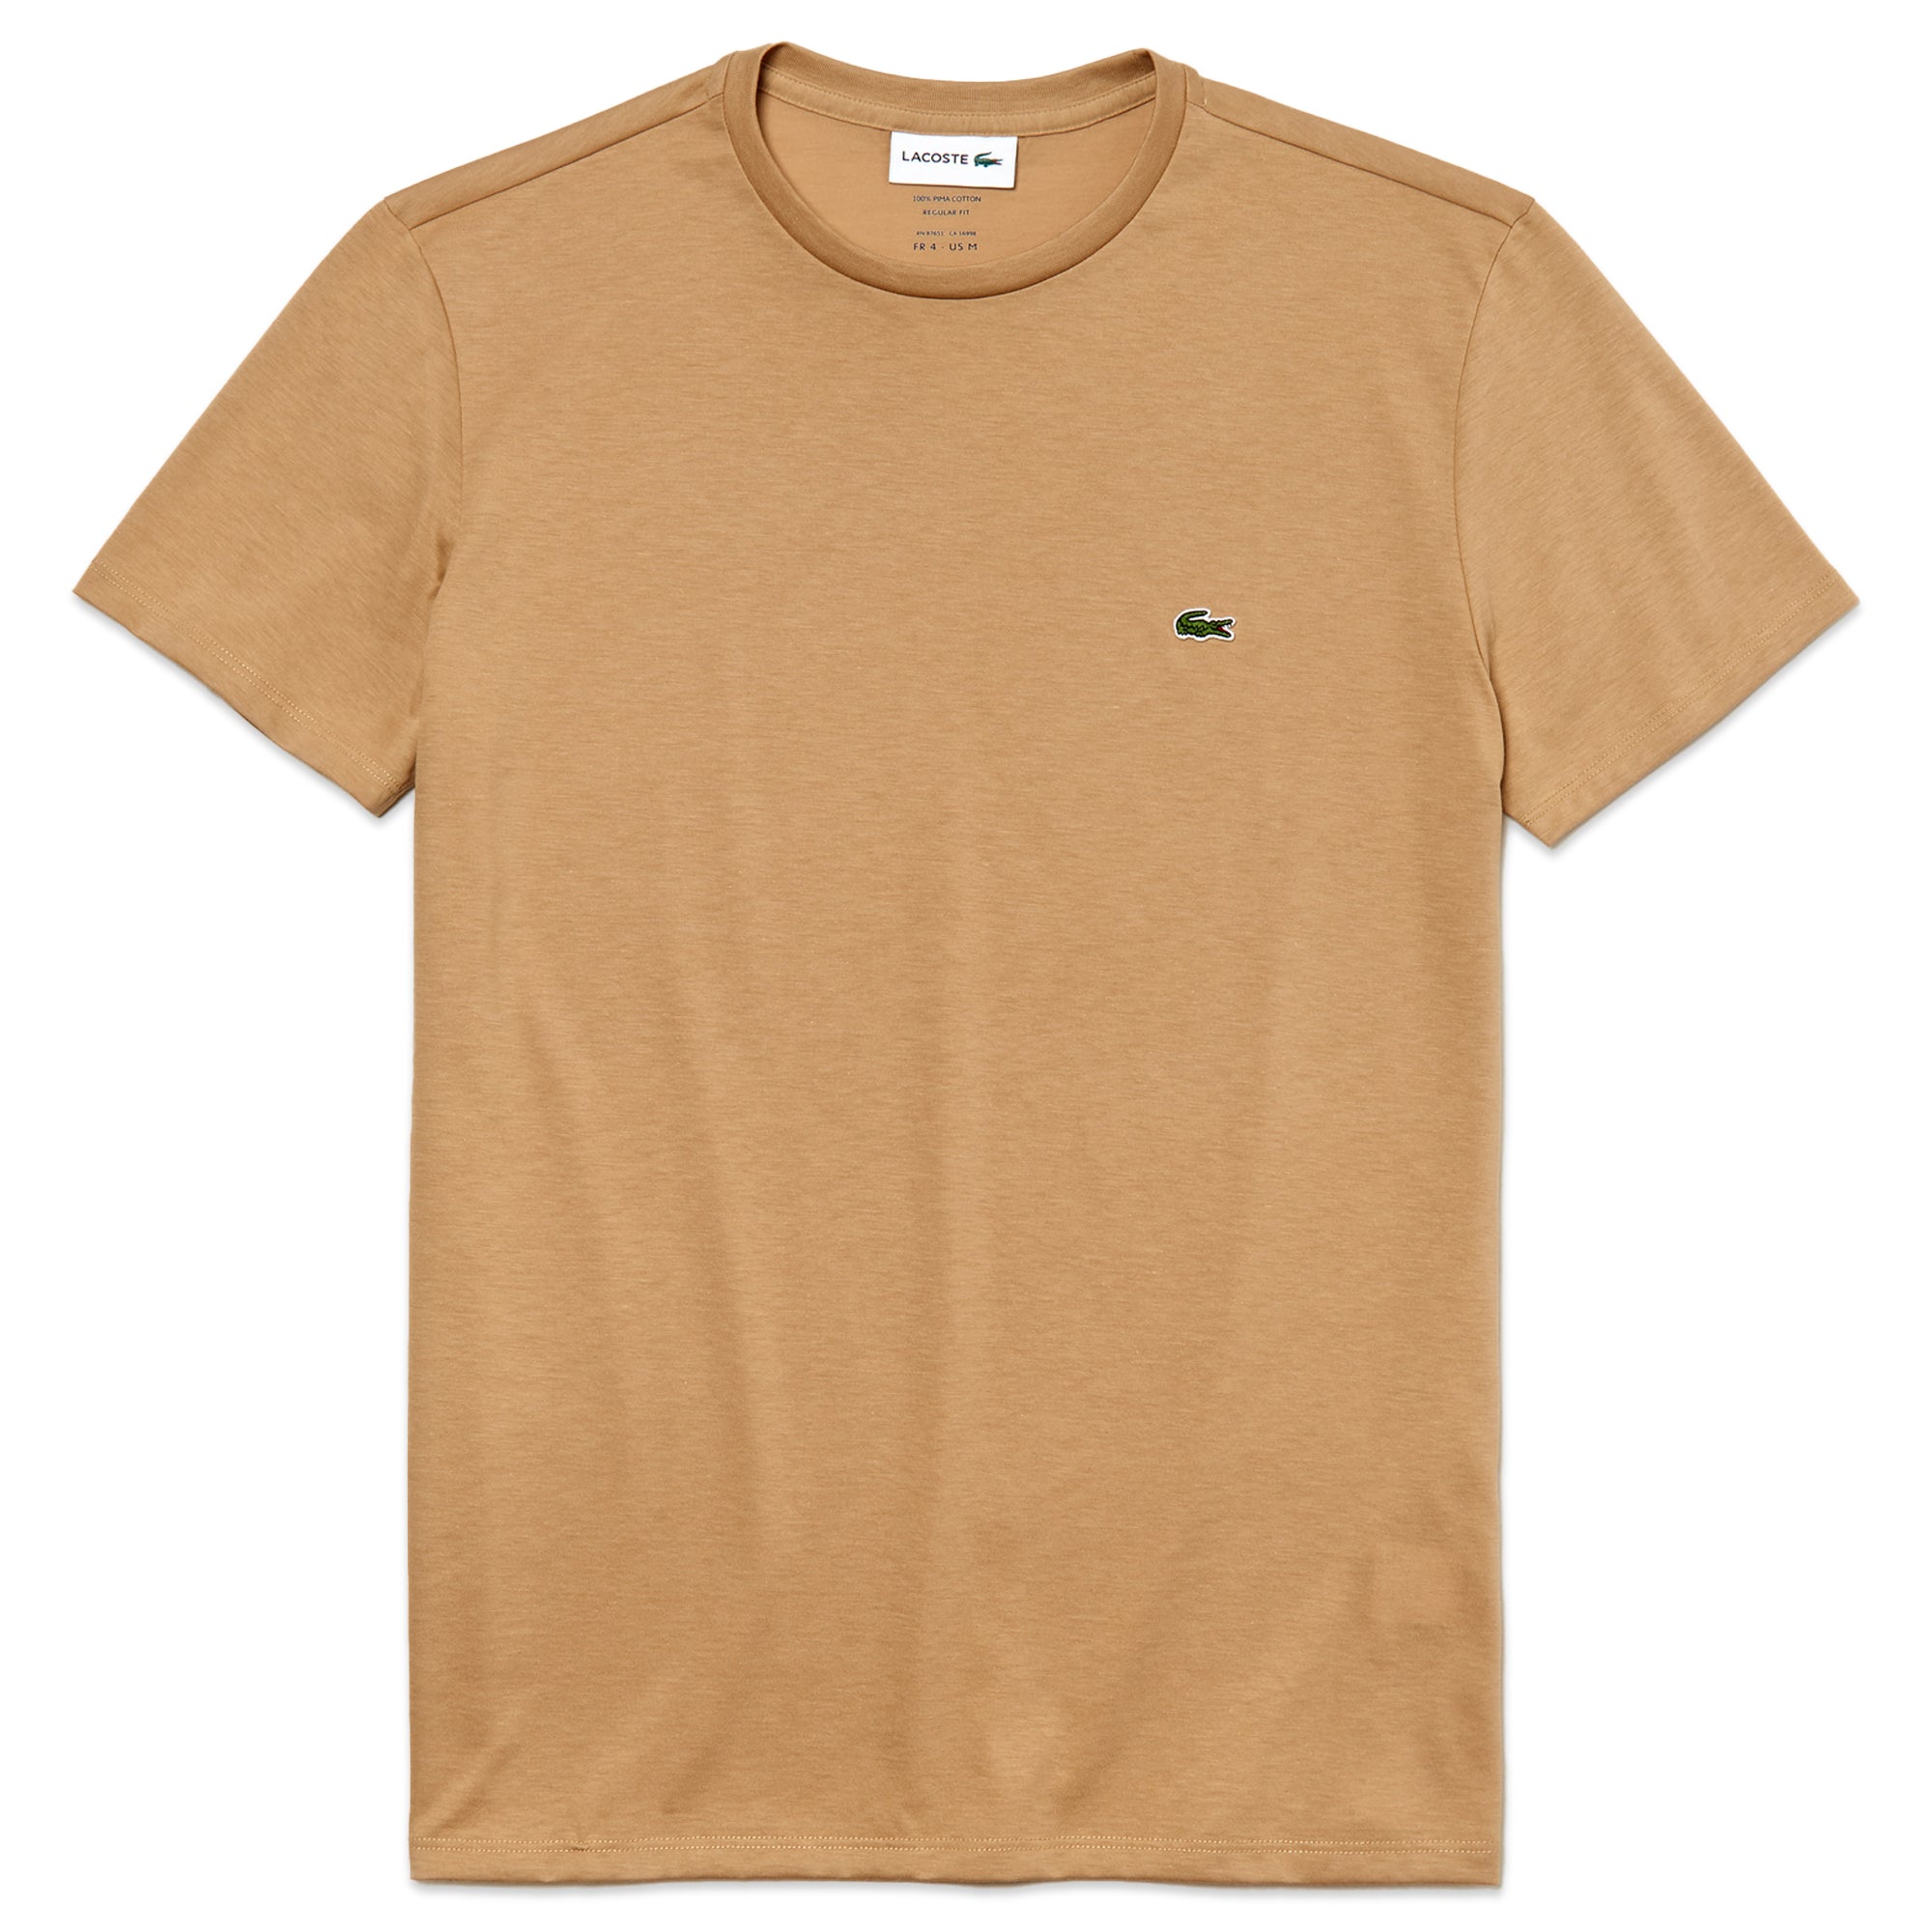 Lacoste Pima Cotton T-Shirt TH6709 - Viennese